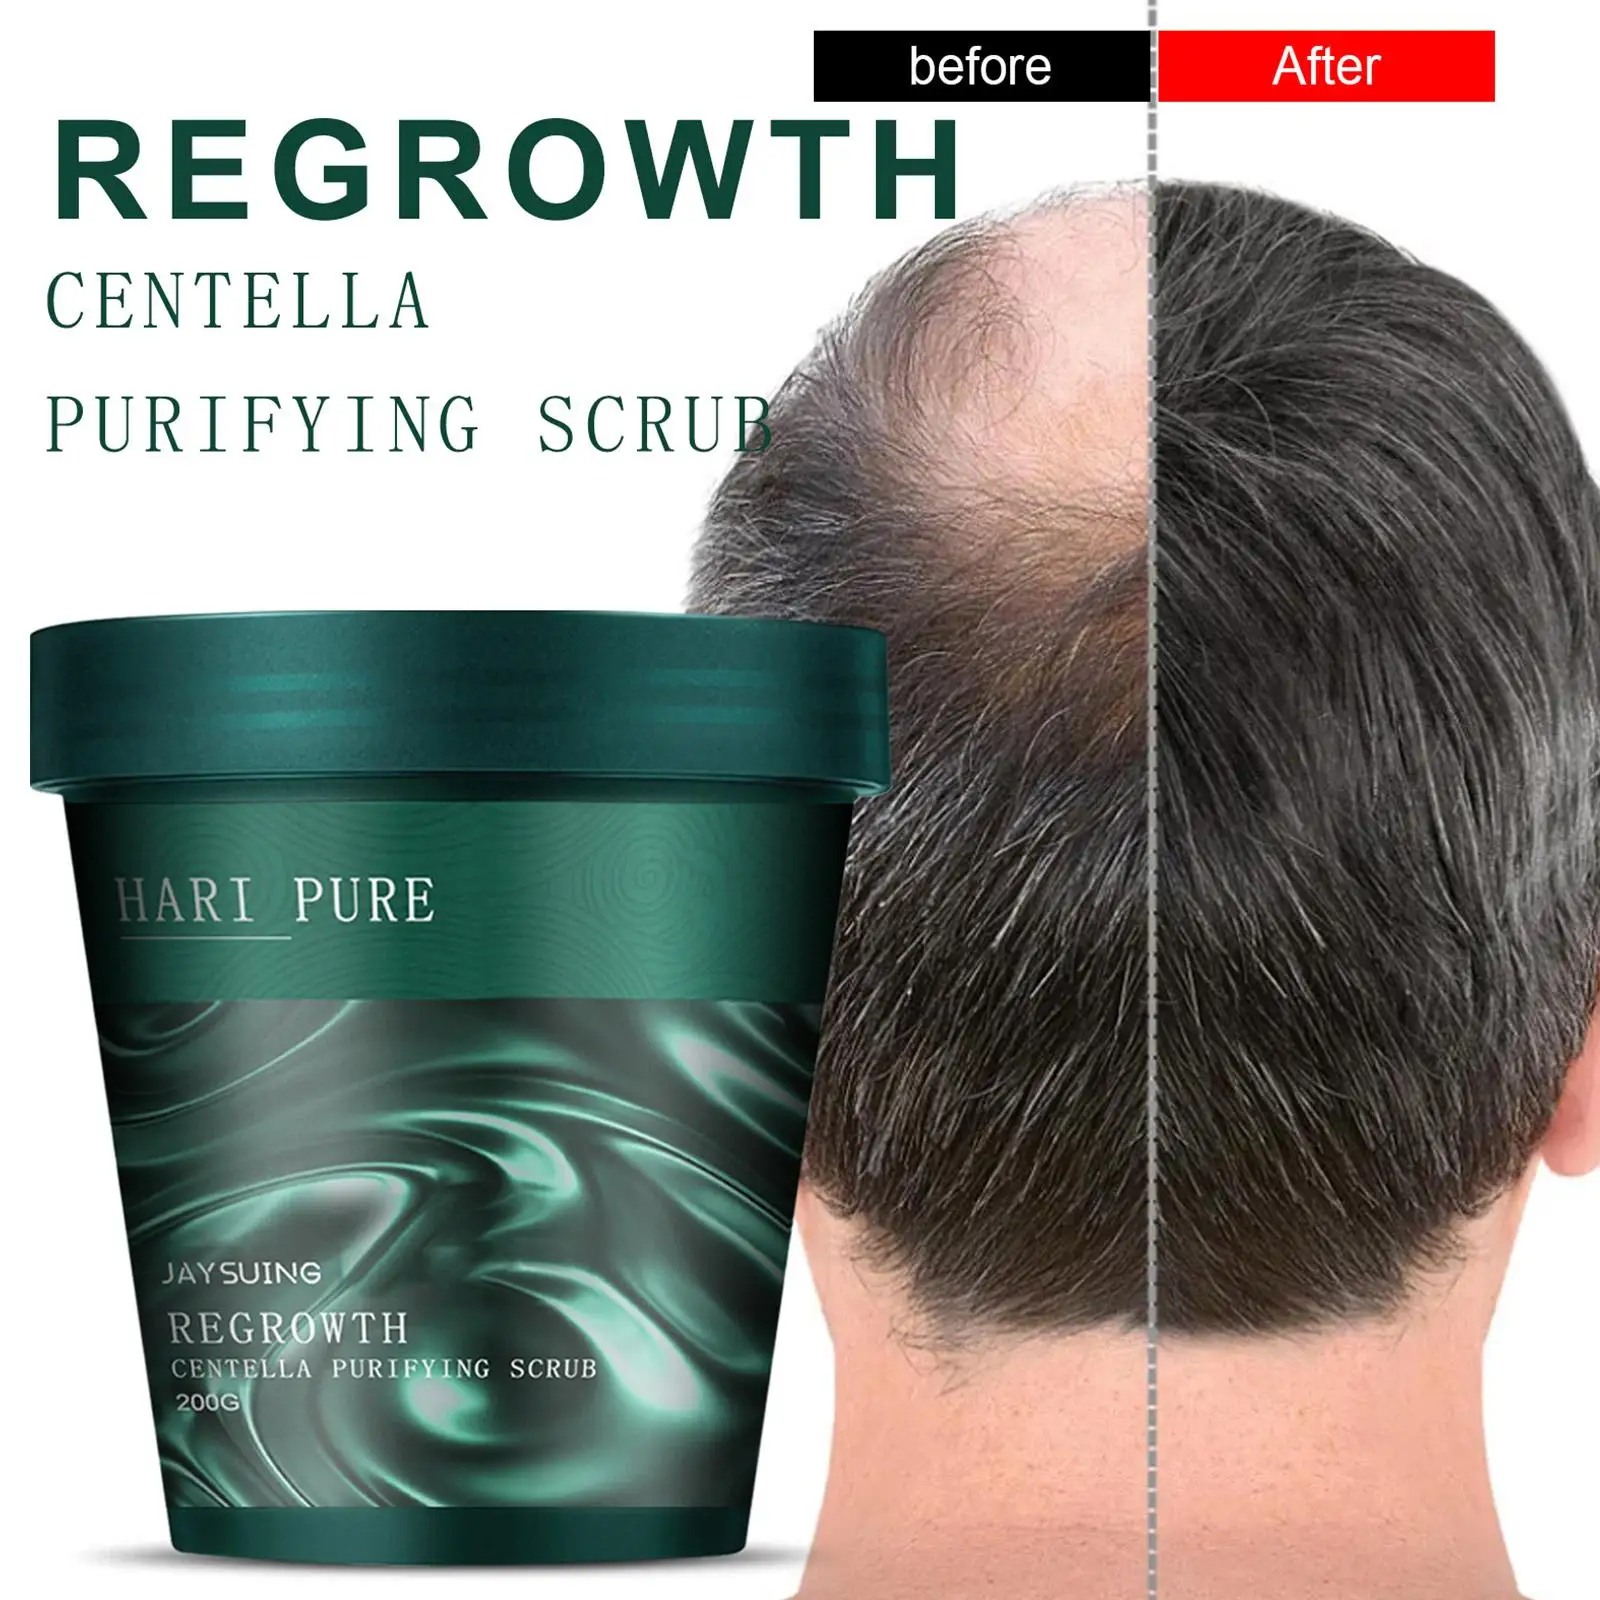 

2022 New Centella Purifying Scrub Hair Cleansing Anti-dandruff Anti-itching Care Scalp Anti-Growing Scrub 200g